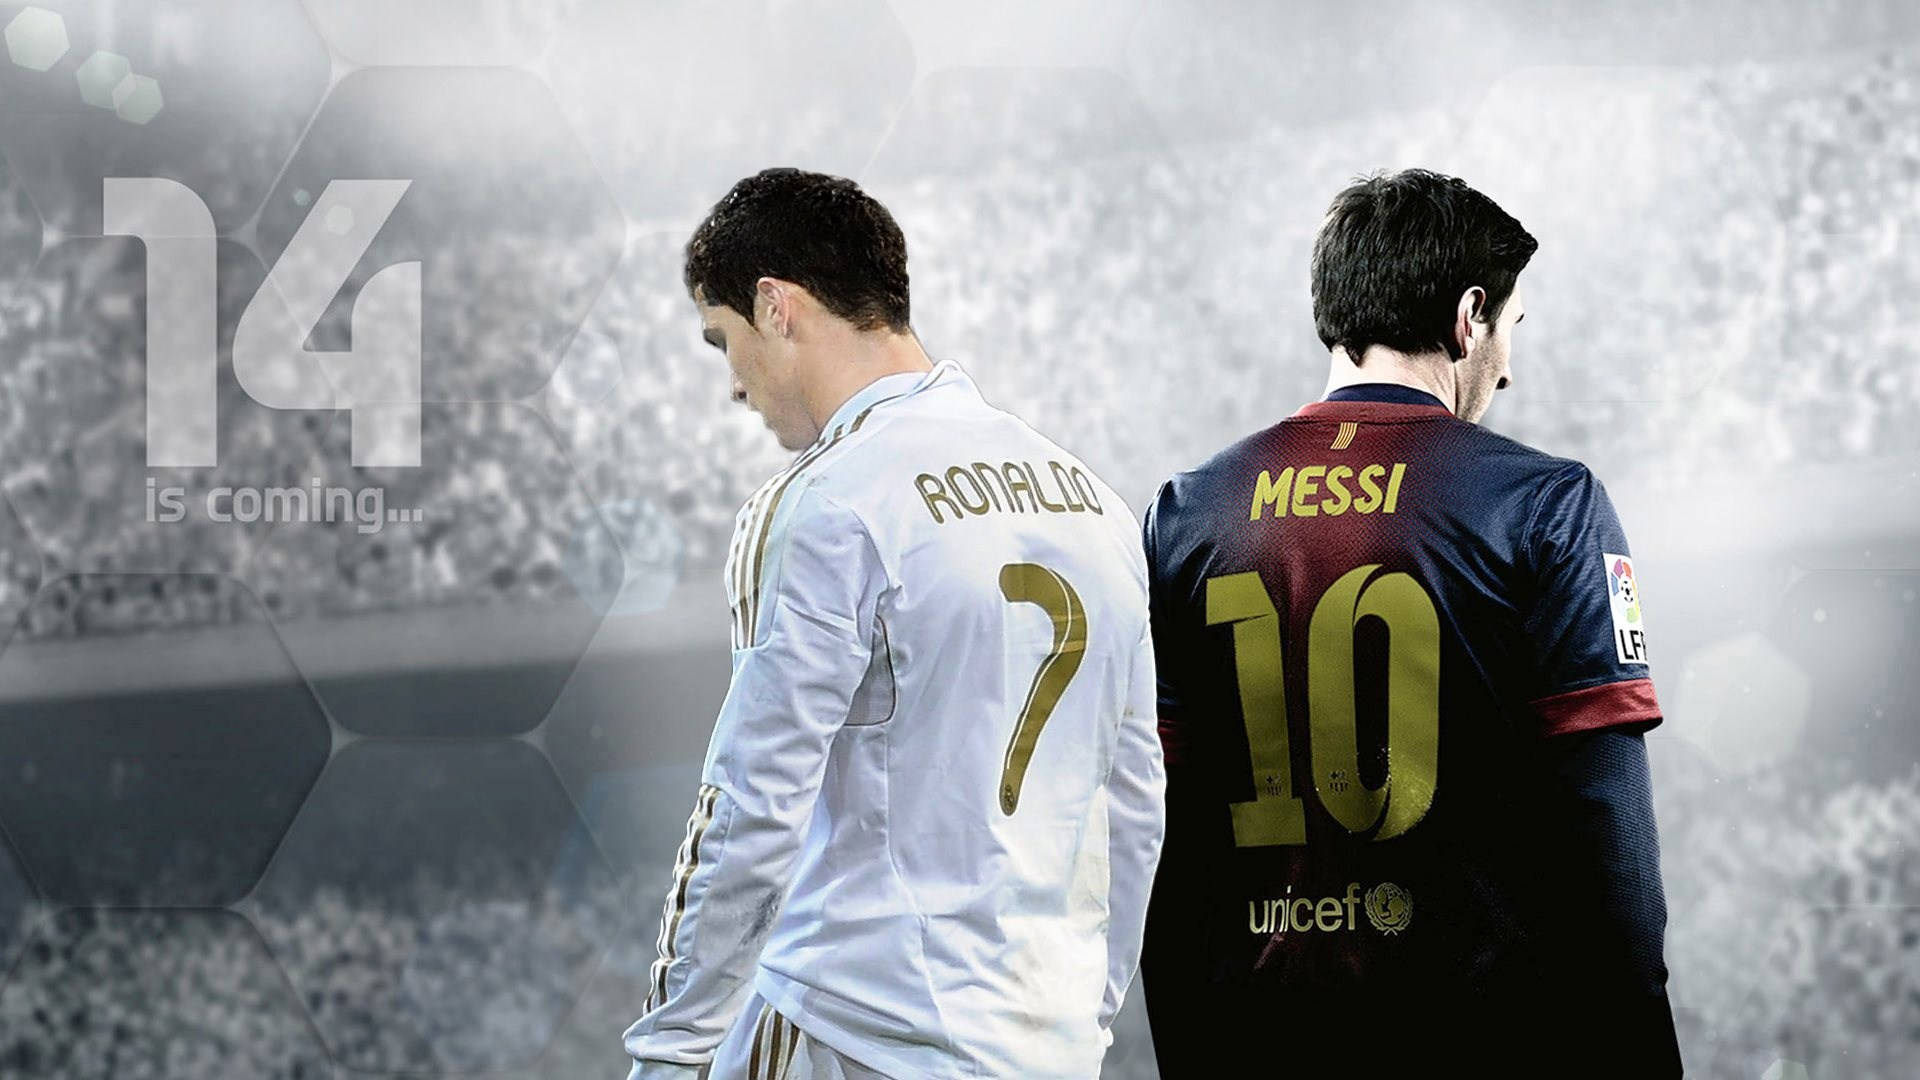 Cool Football Players Messi And Ronaldo Wallpaper